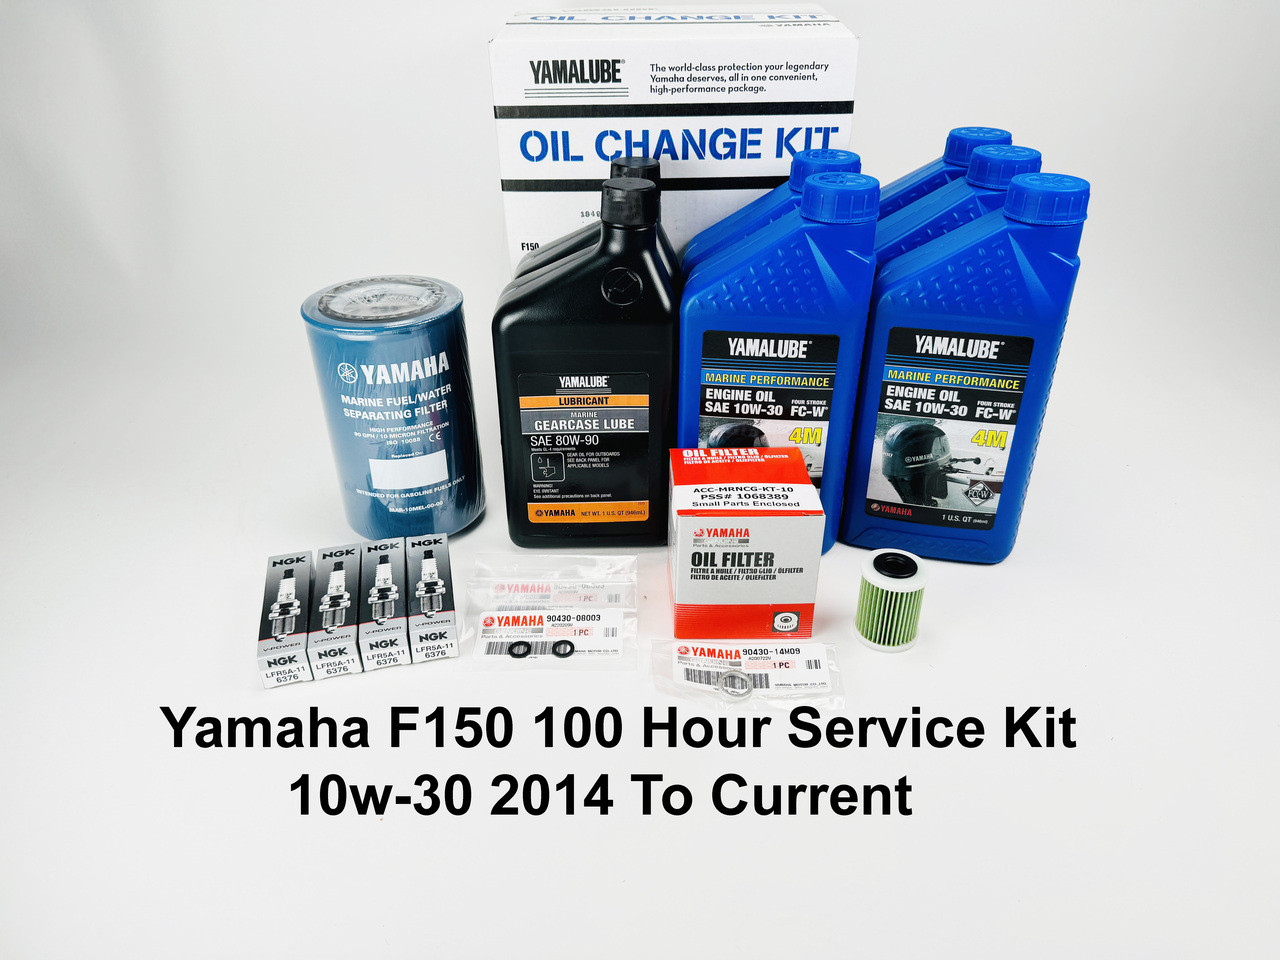 $179.99* GENUINE YAMAHA no tax* YAMAHA F150 100 HOUR SERVICE MAINTENANCE KIT - YAMALUBE 10W-30 - 2014-CURRENT *In Stock & Ready To Ship!